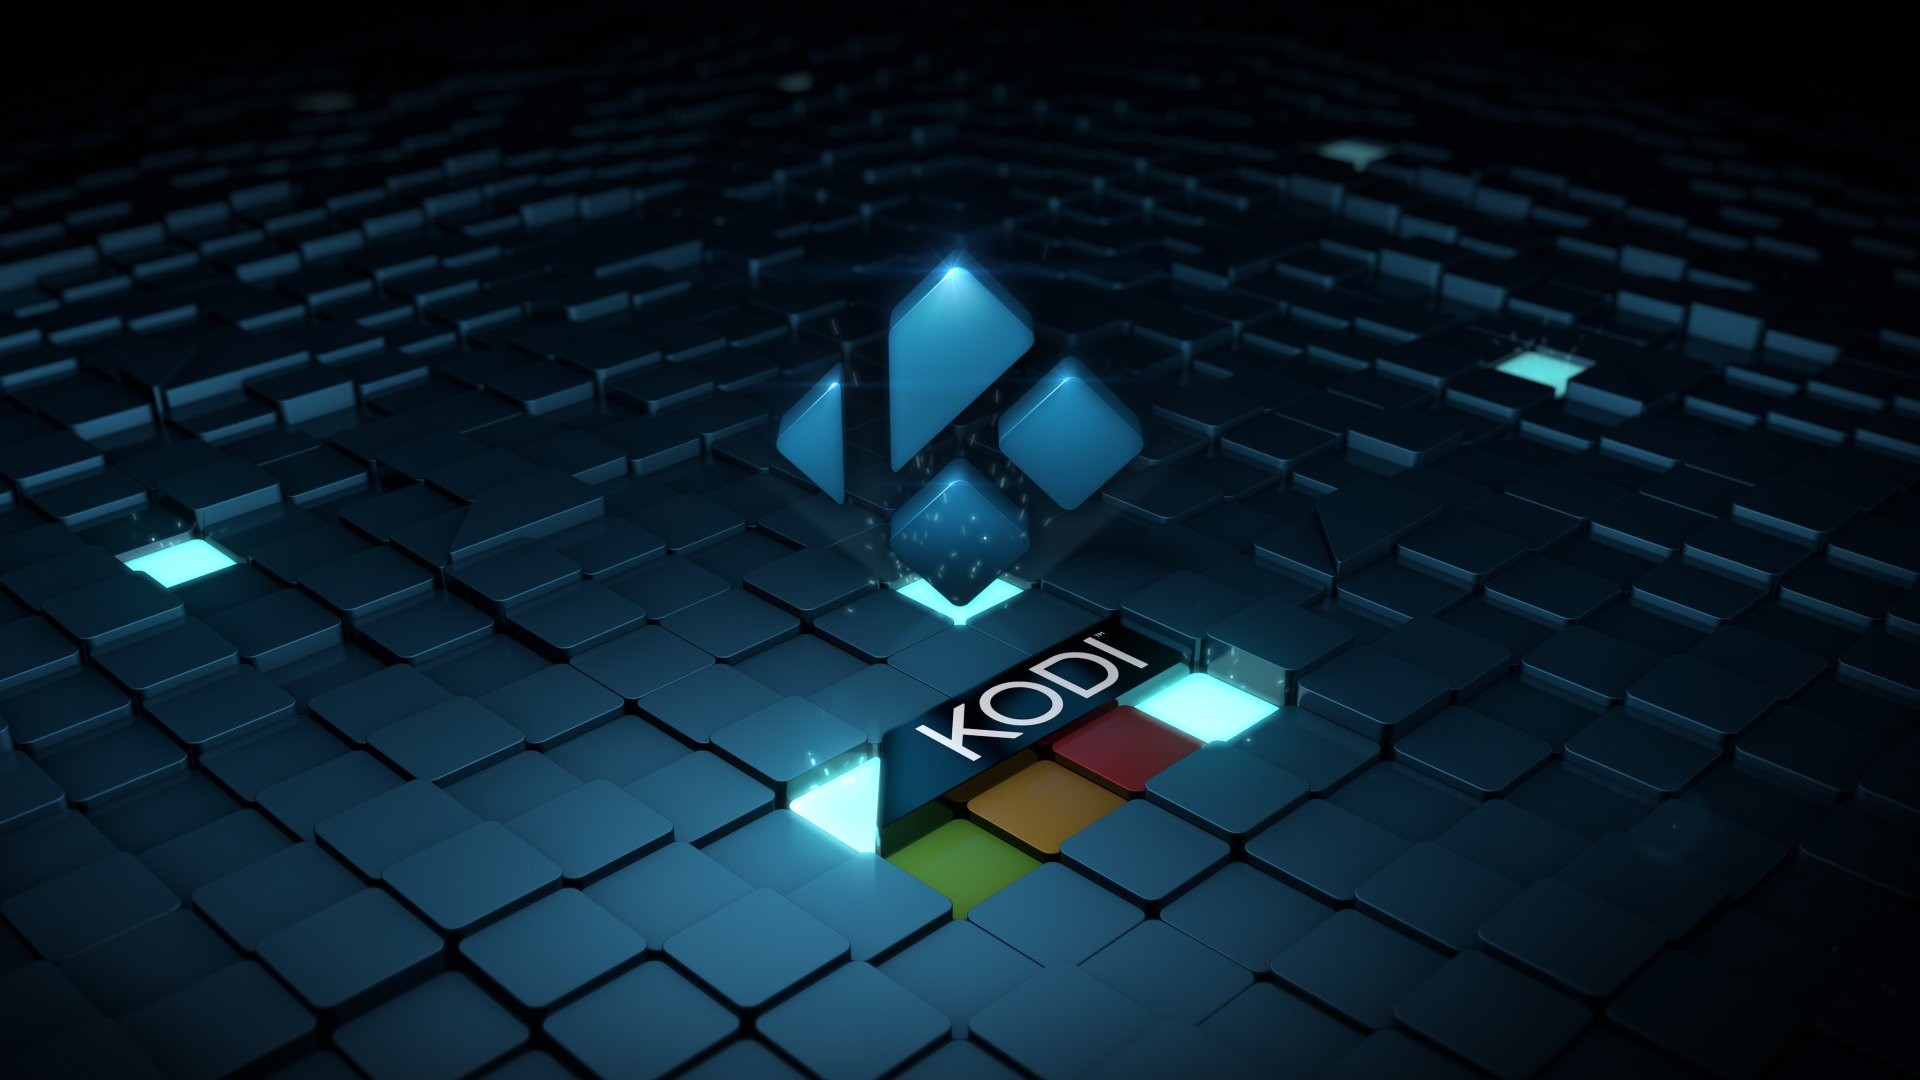 Kodi Background 1080p Wallpaper Image